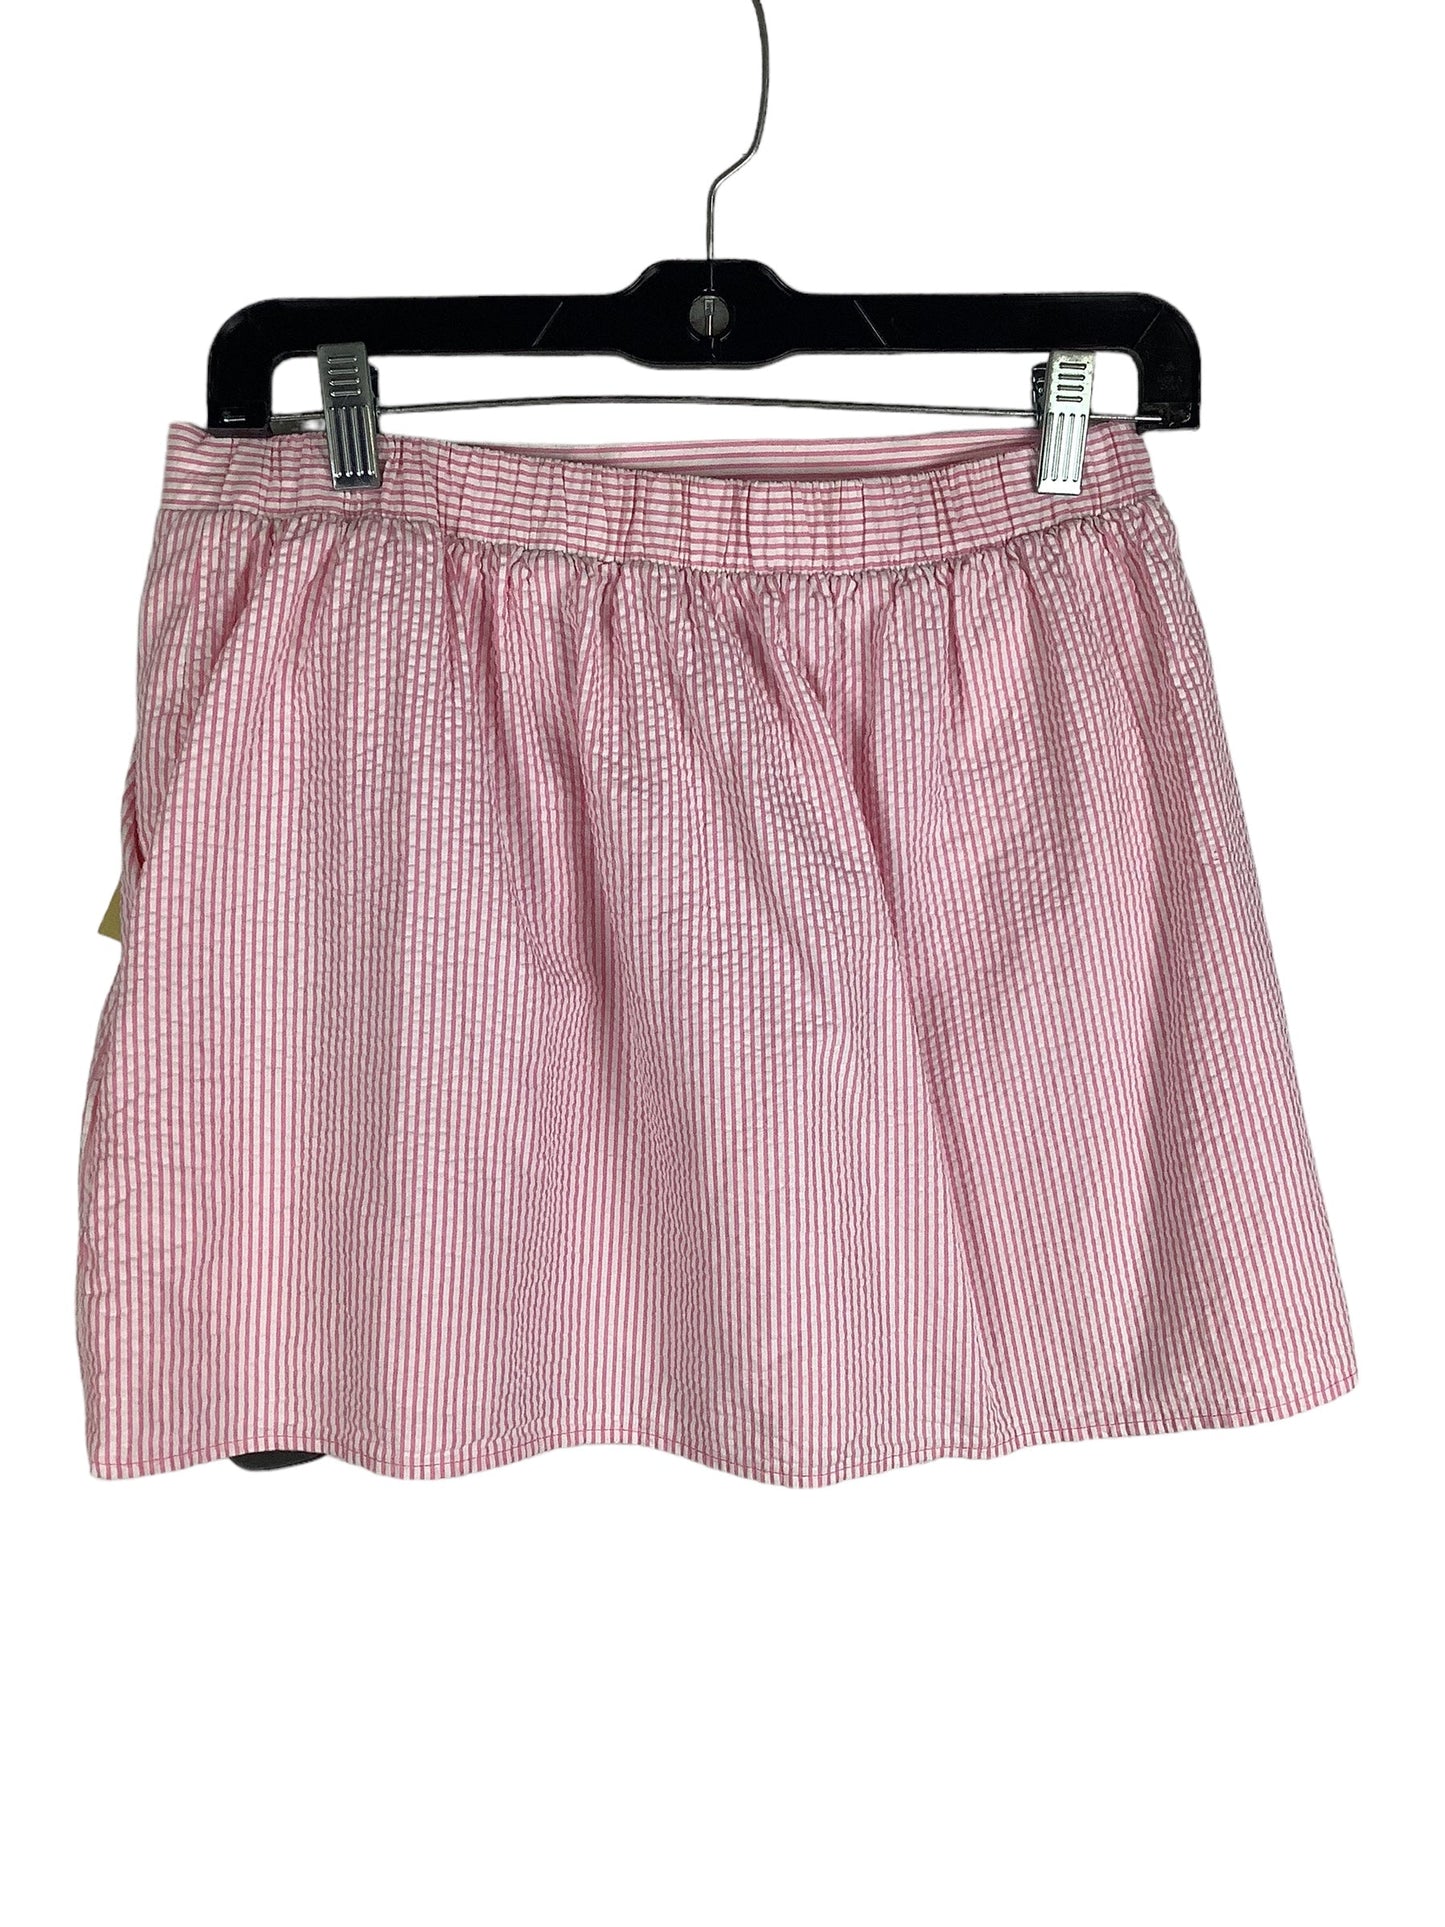 Pink & White Skirt Designer Lilly Pulitzer, Size S